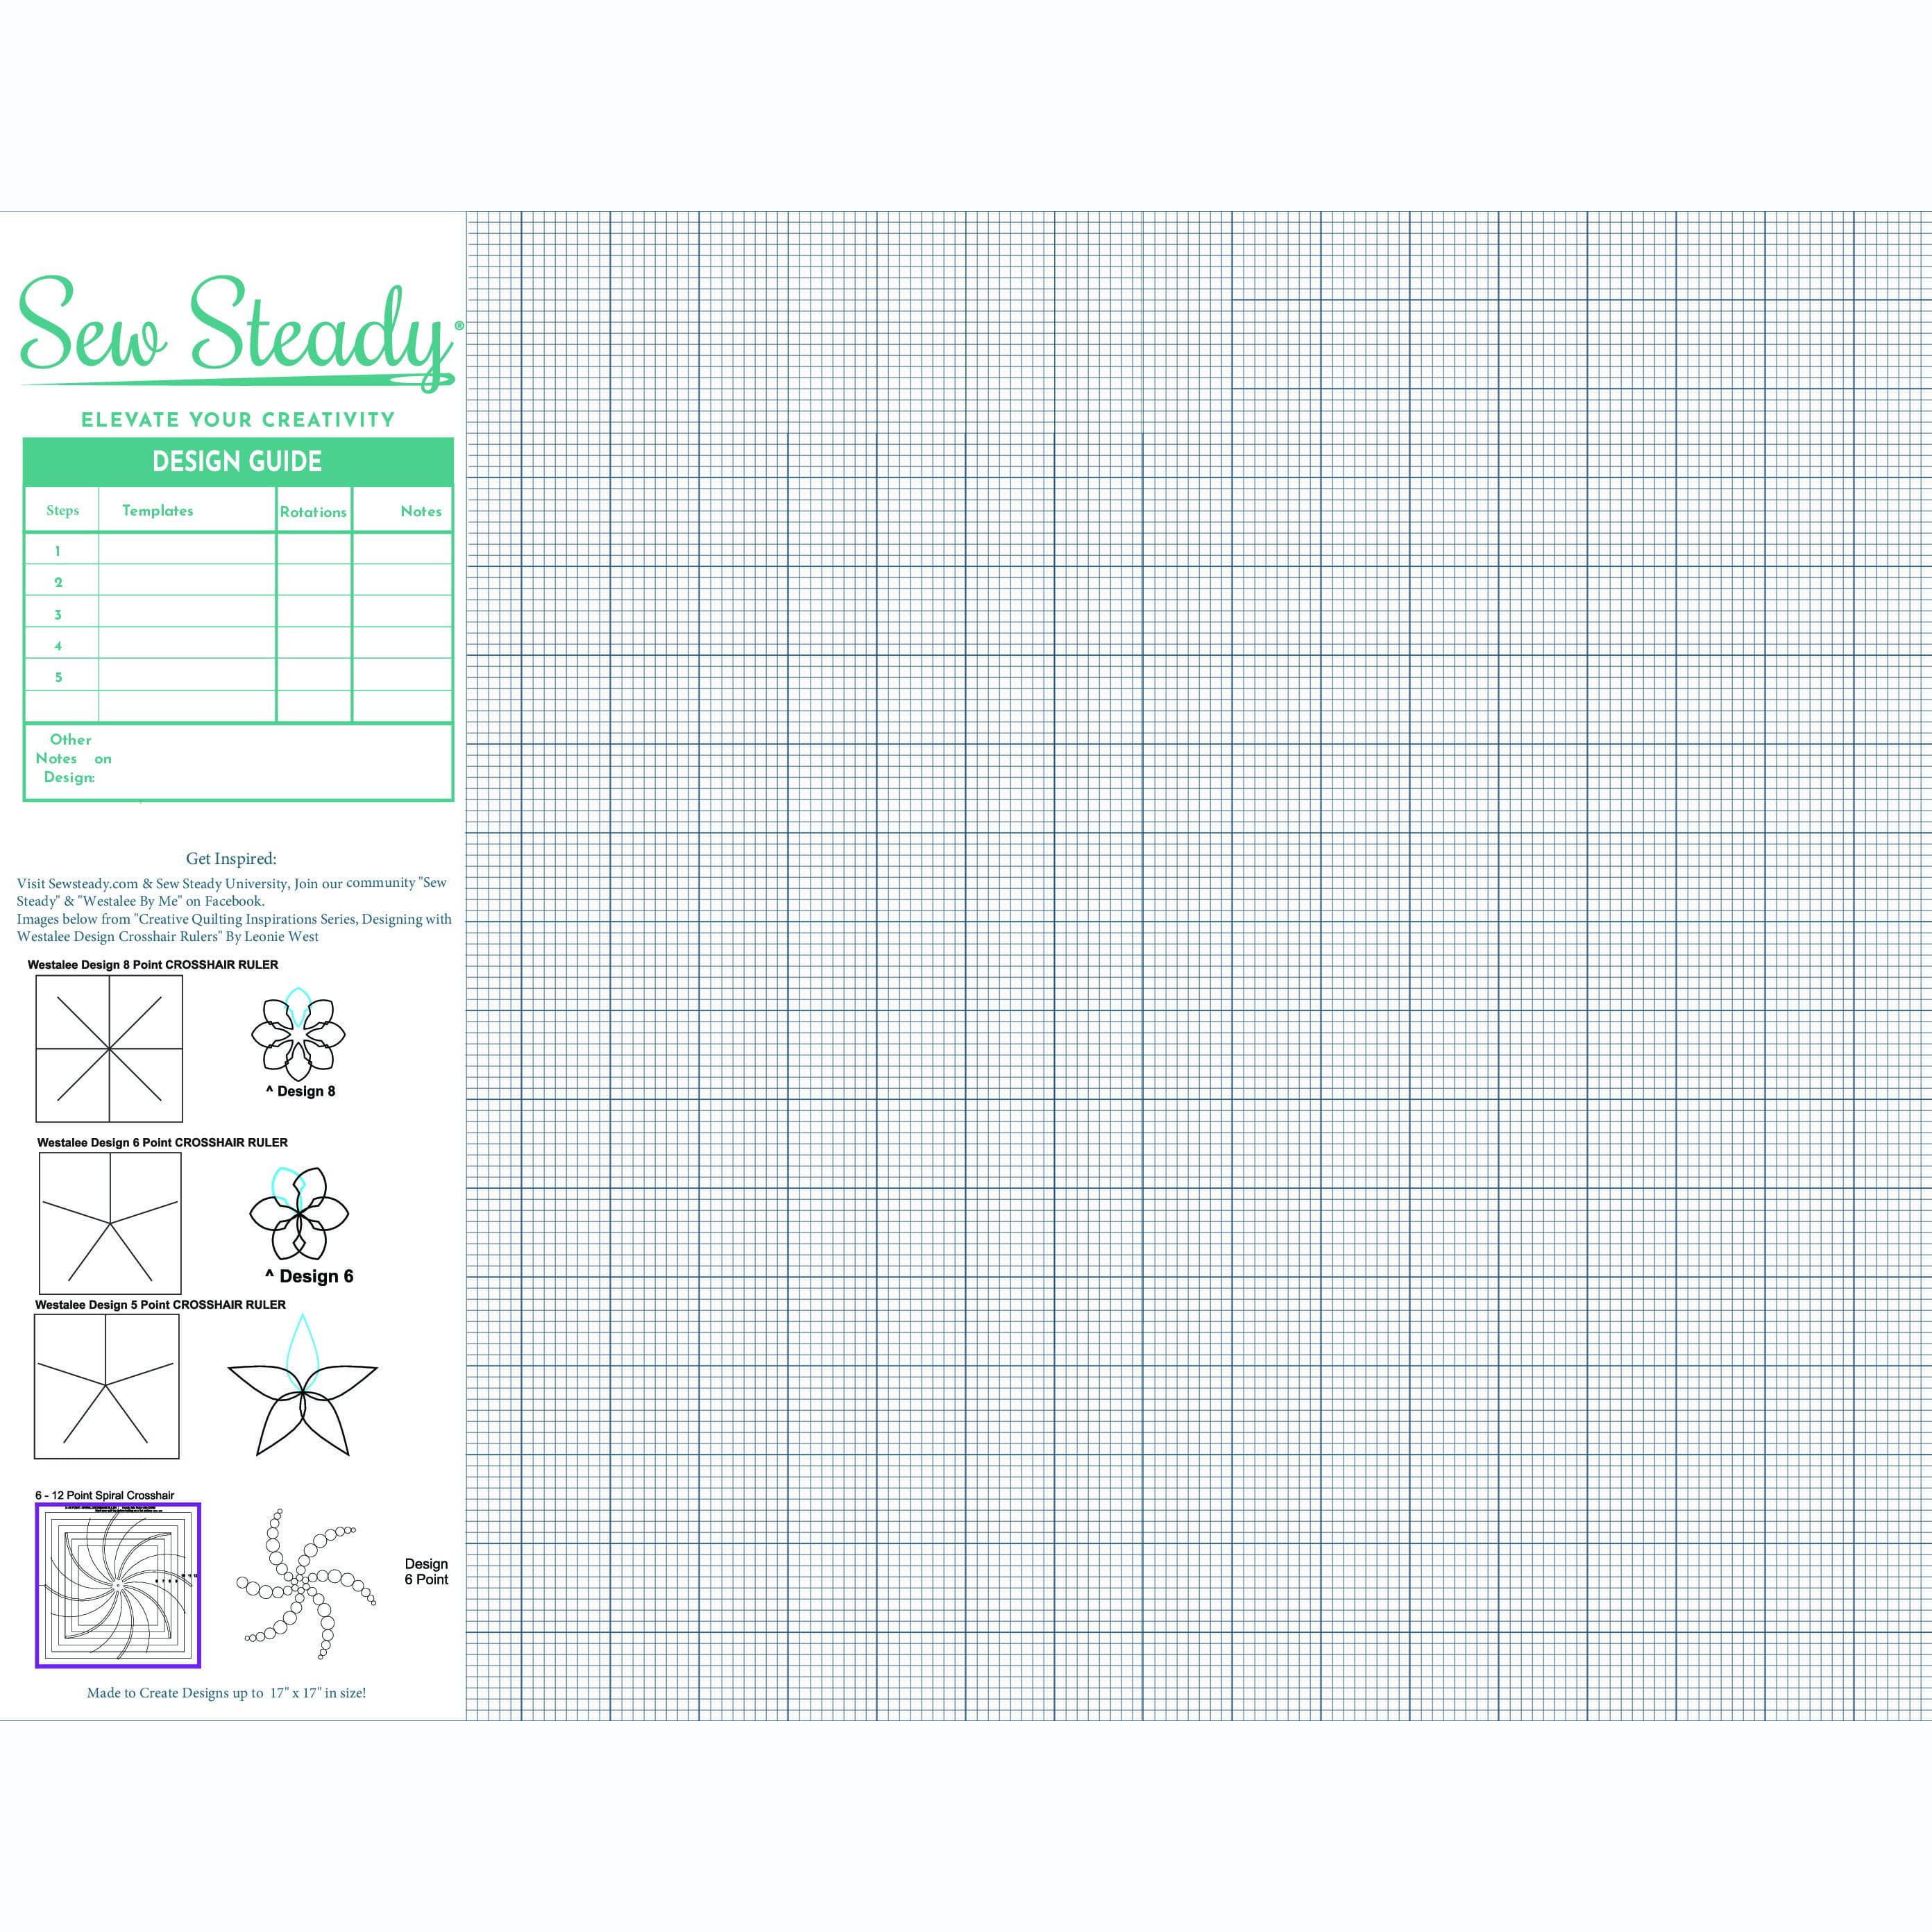 Sketch Pad & Design Guide image # 103952